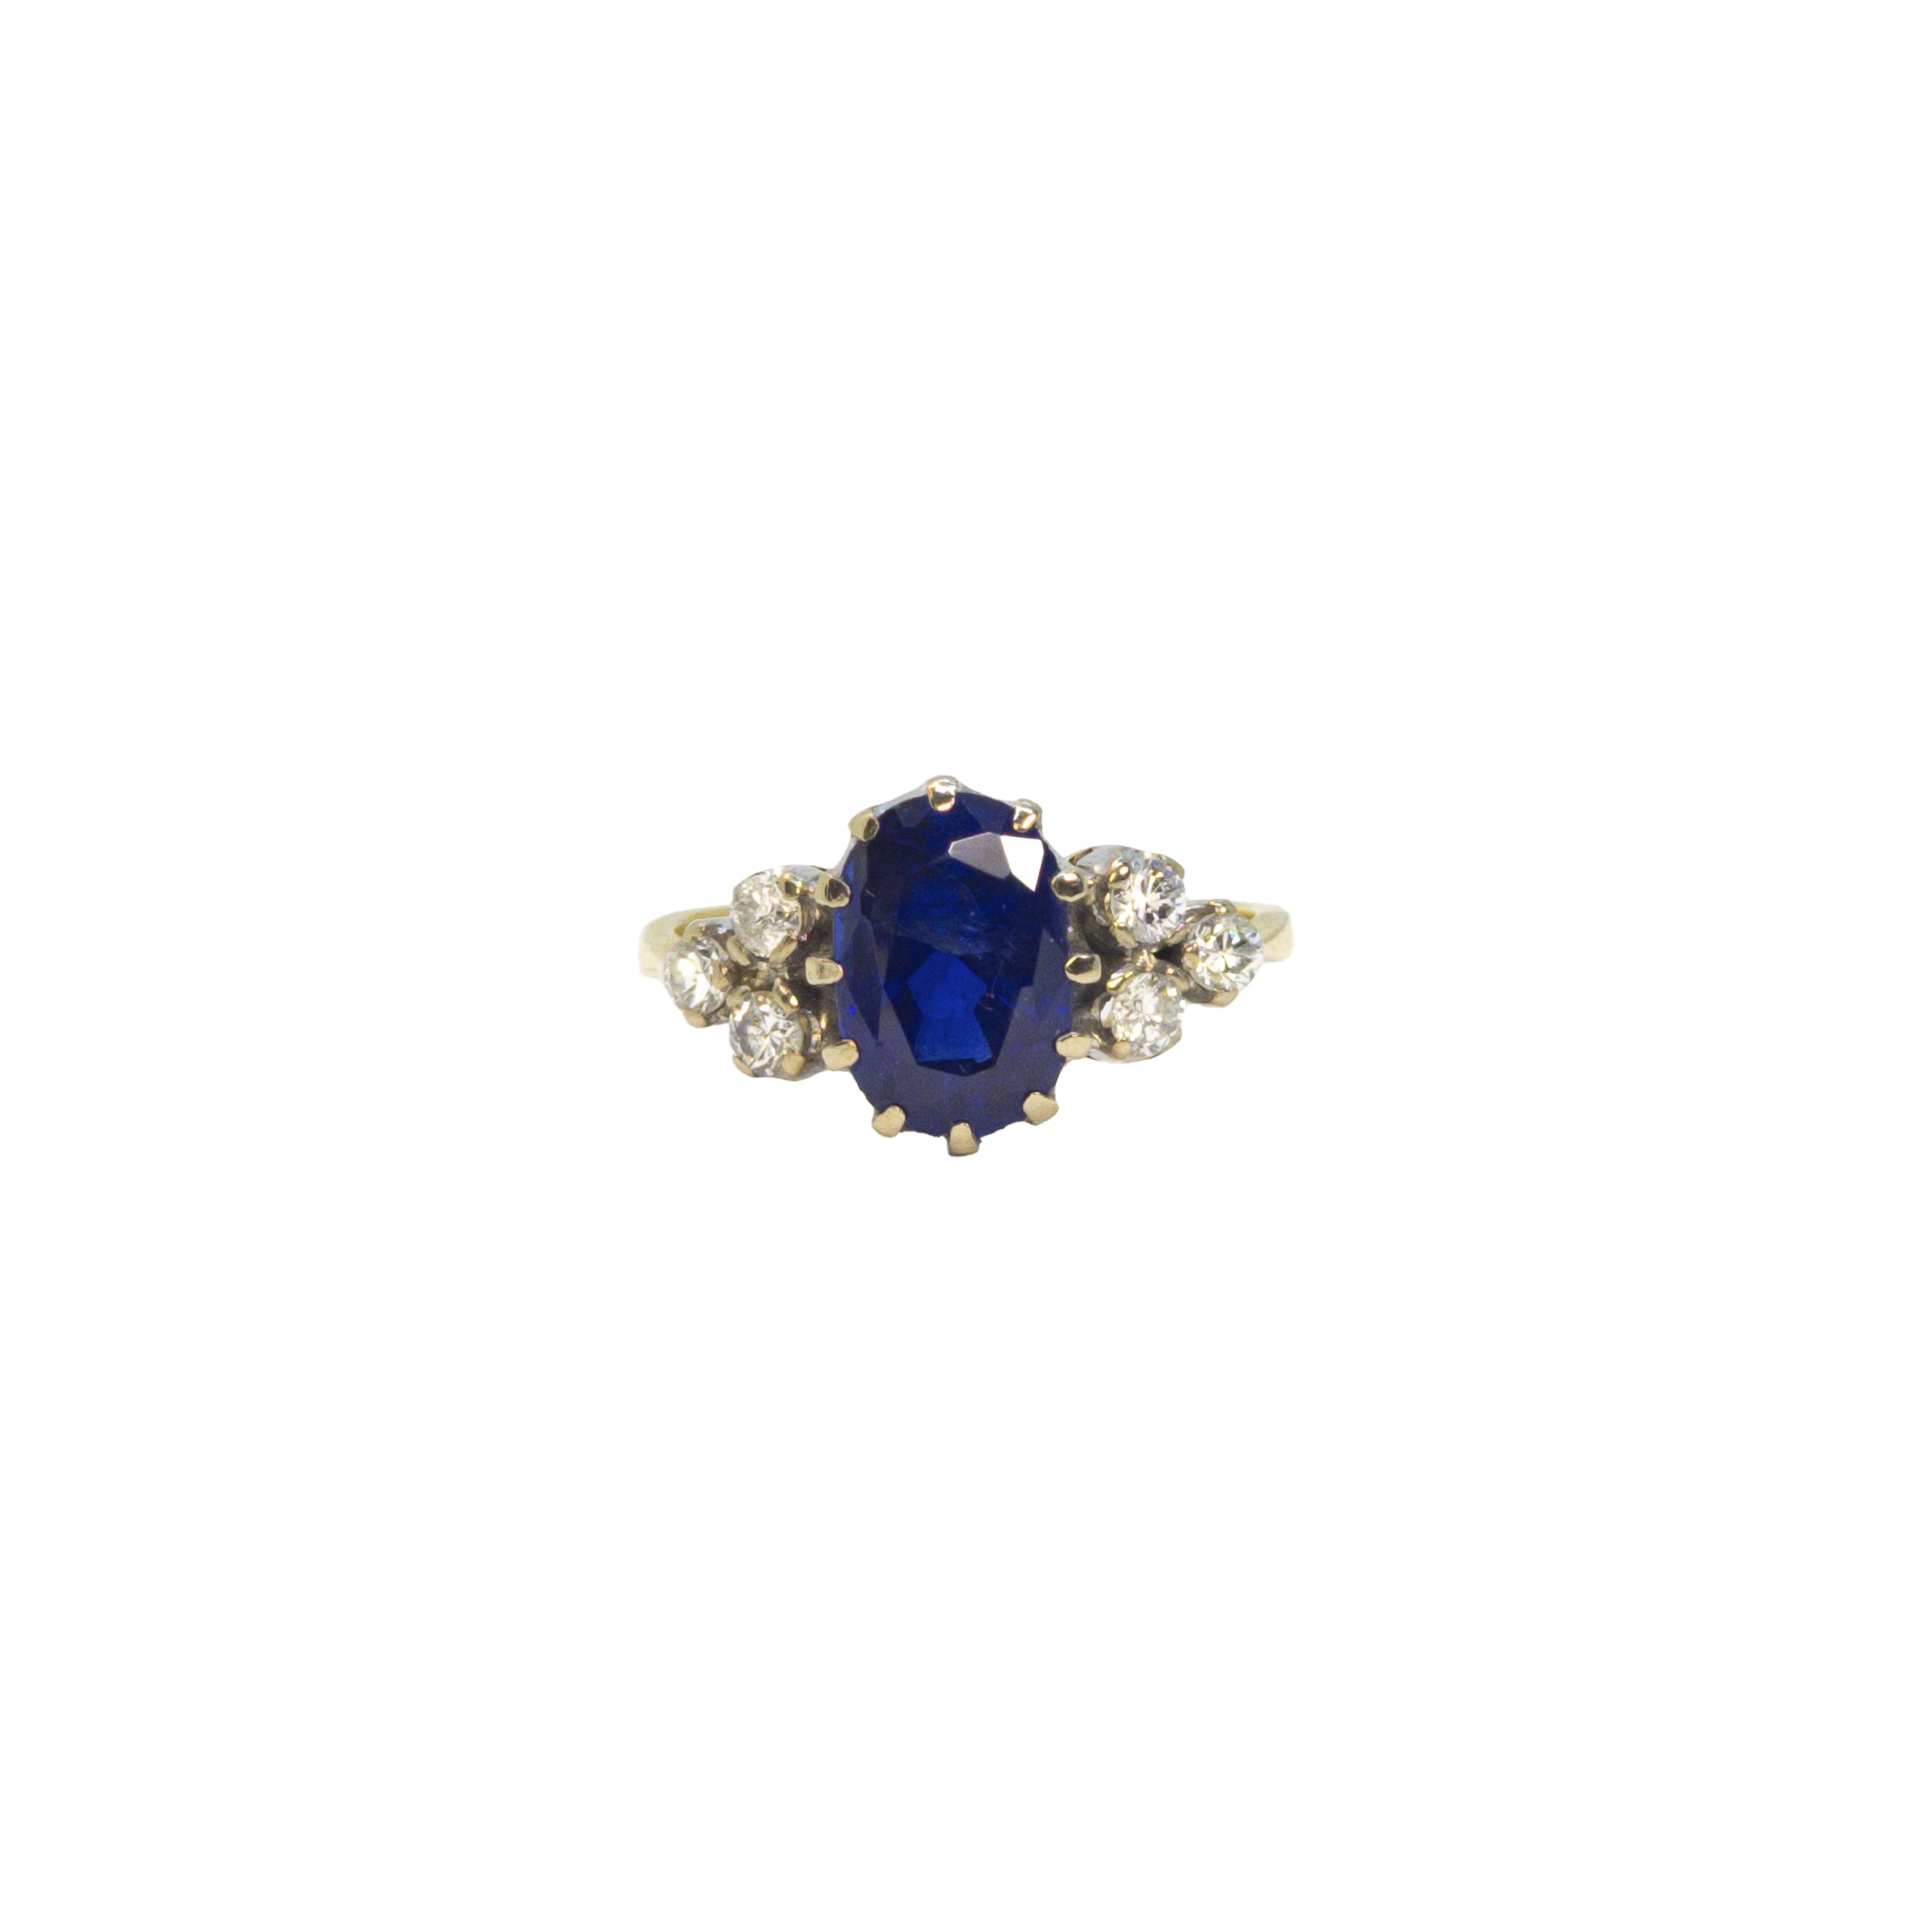 British, Circa 1940, A fine unheated Burmese sapphire and diamond dress ring